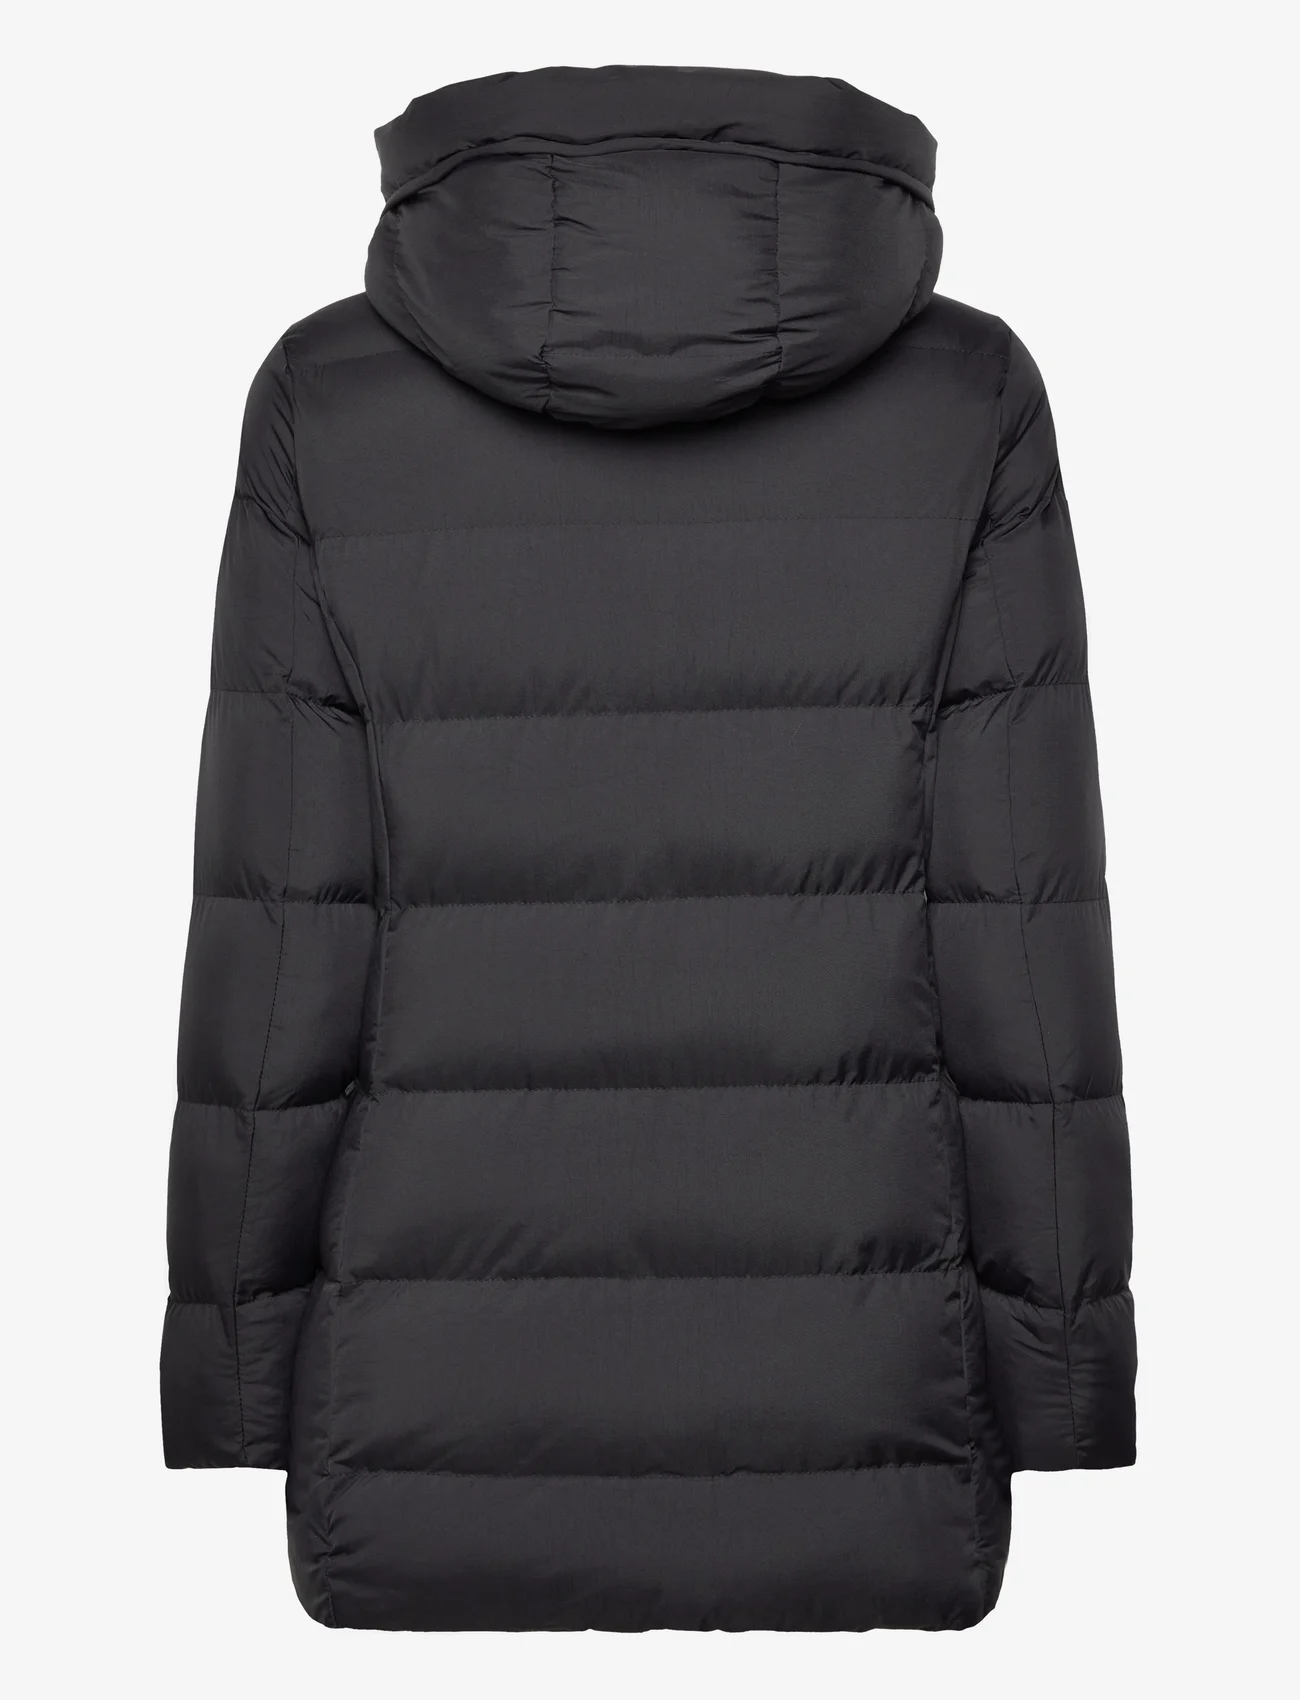 Garcia - ladies outdoor jacket - winter jackets - black - 1